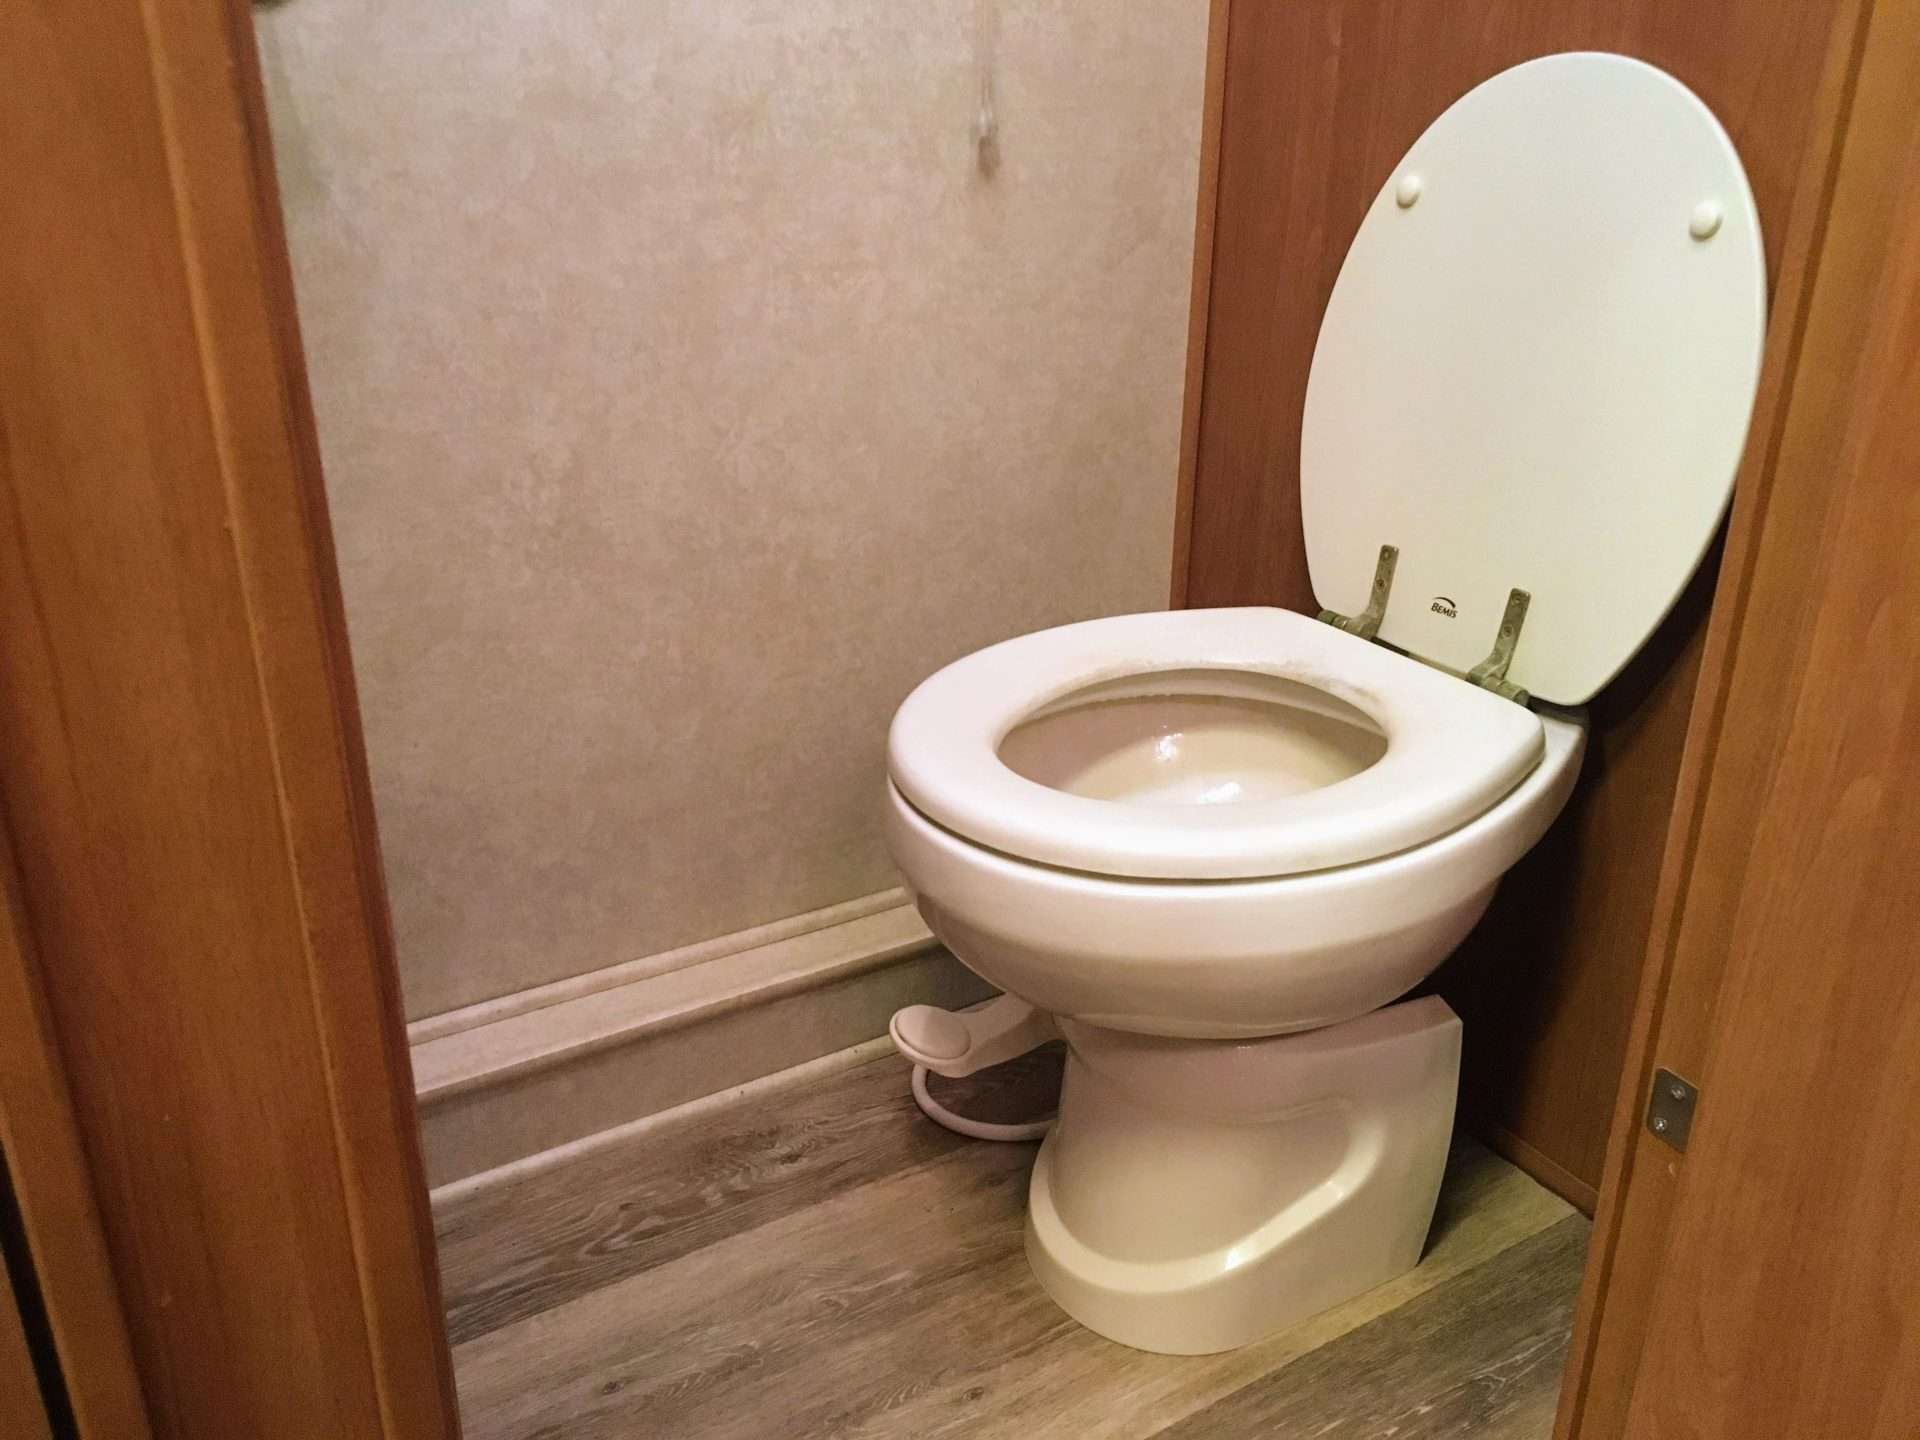 RV foot flush toilet